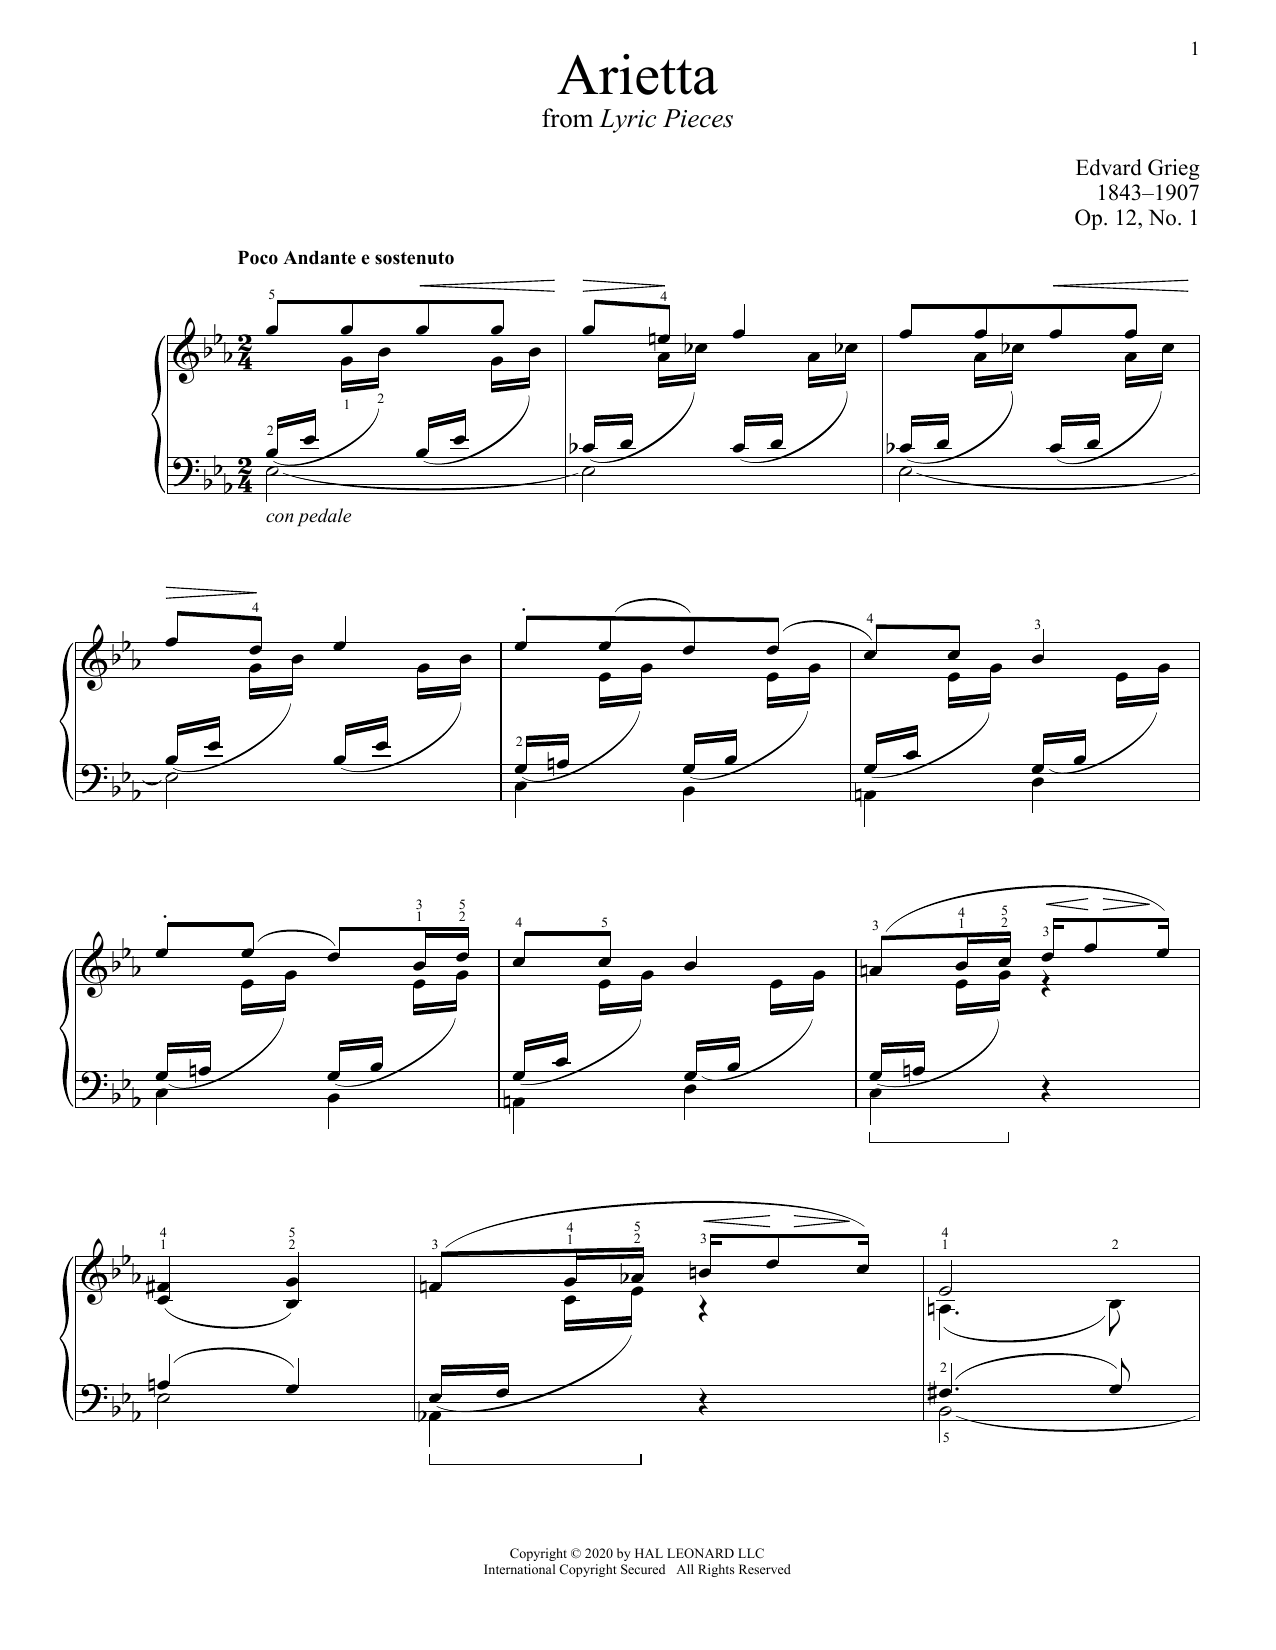 Edvard Grieg Arietta, Op. 12, No. 1 sheet music notes printable PDF score